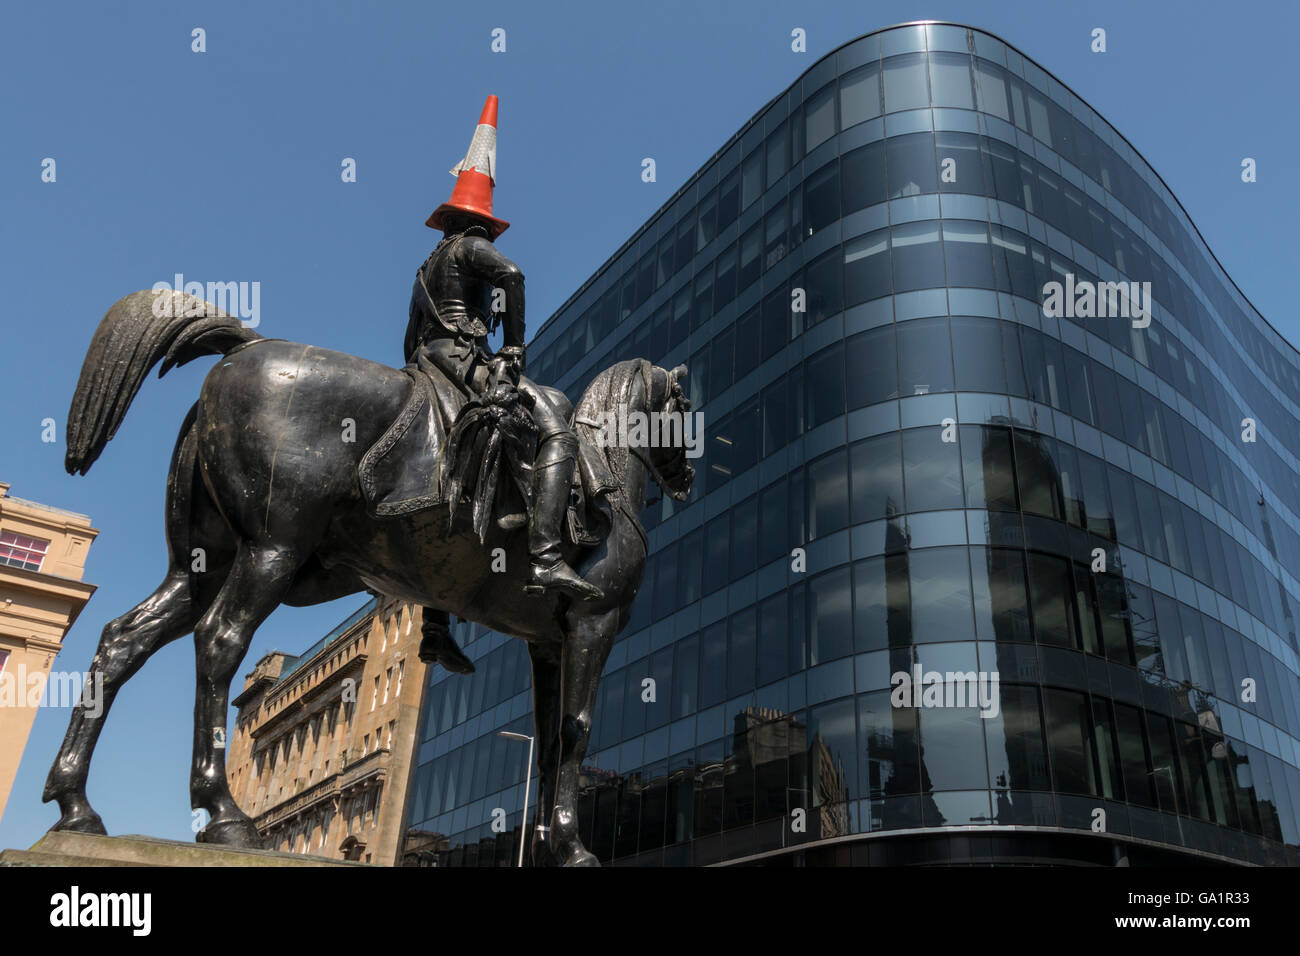 Statue of Duke of Wellington with traffic cone on head, facing modern office block, Glasgow, Scotland, UK, Stock Photo